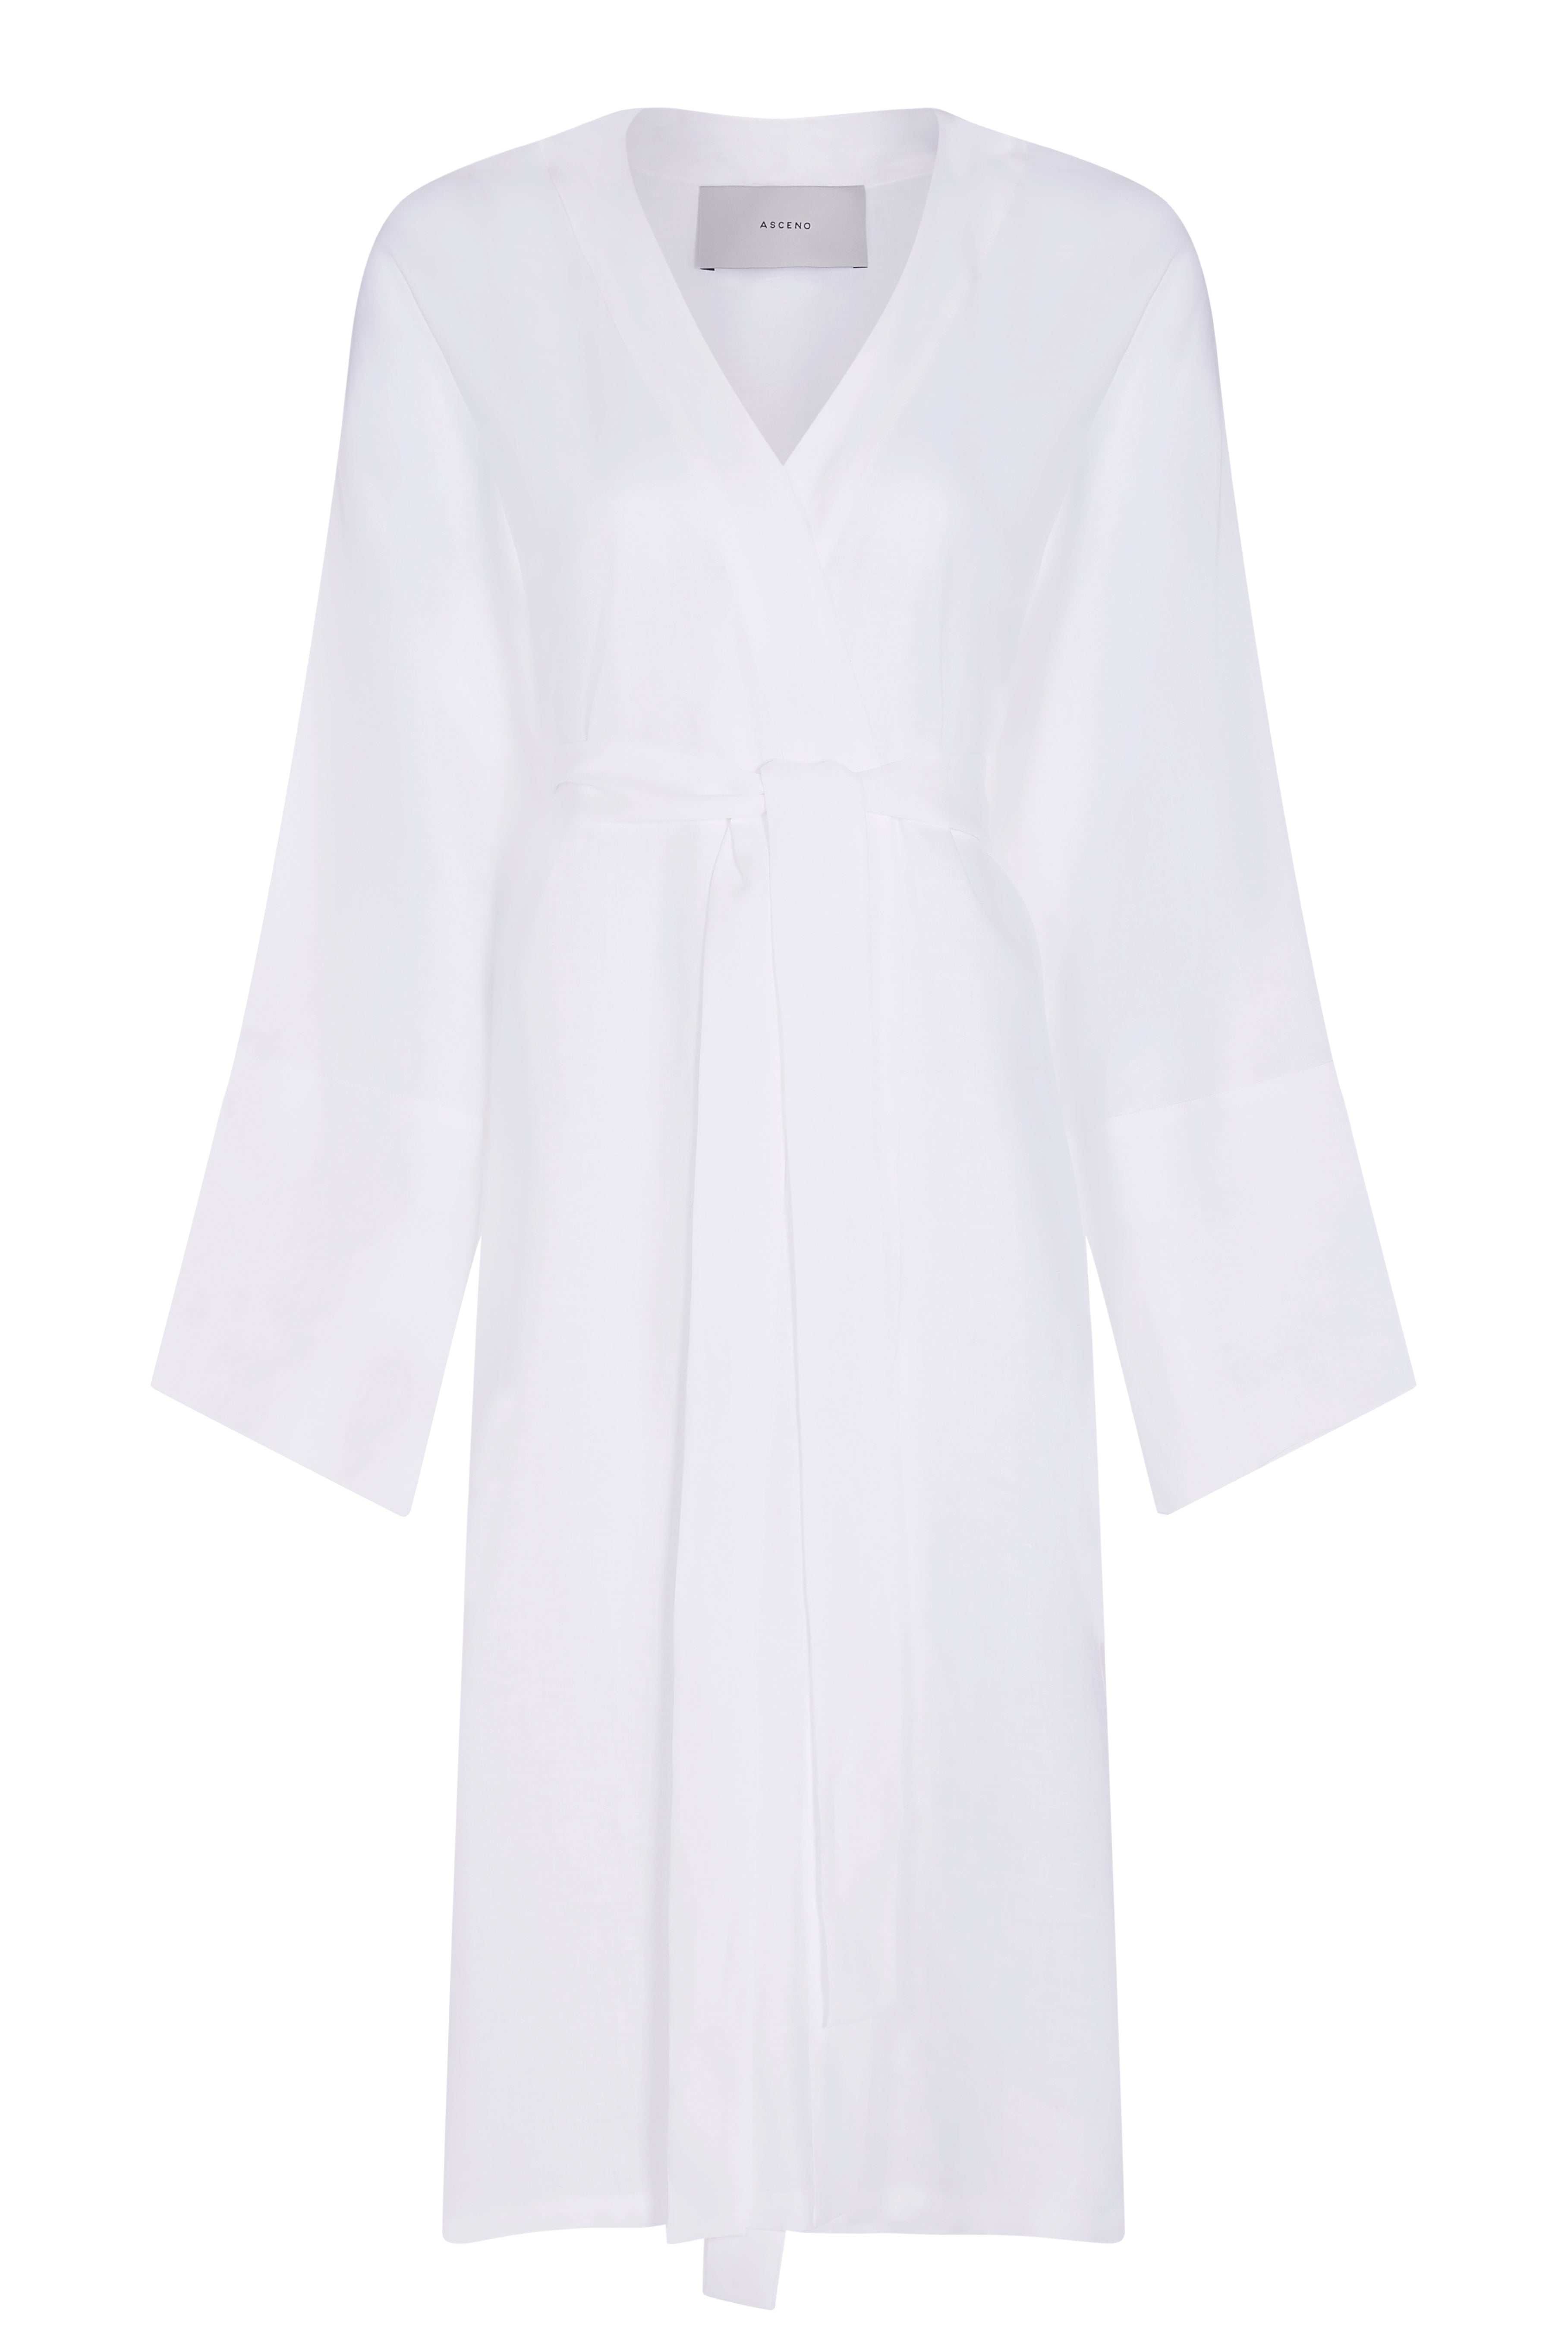 Athens White Linen Robe | White Organic Linen Long Robe